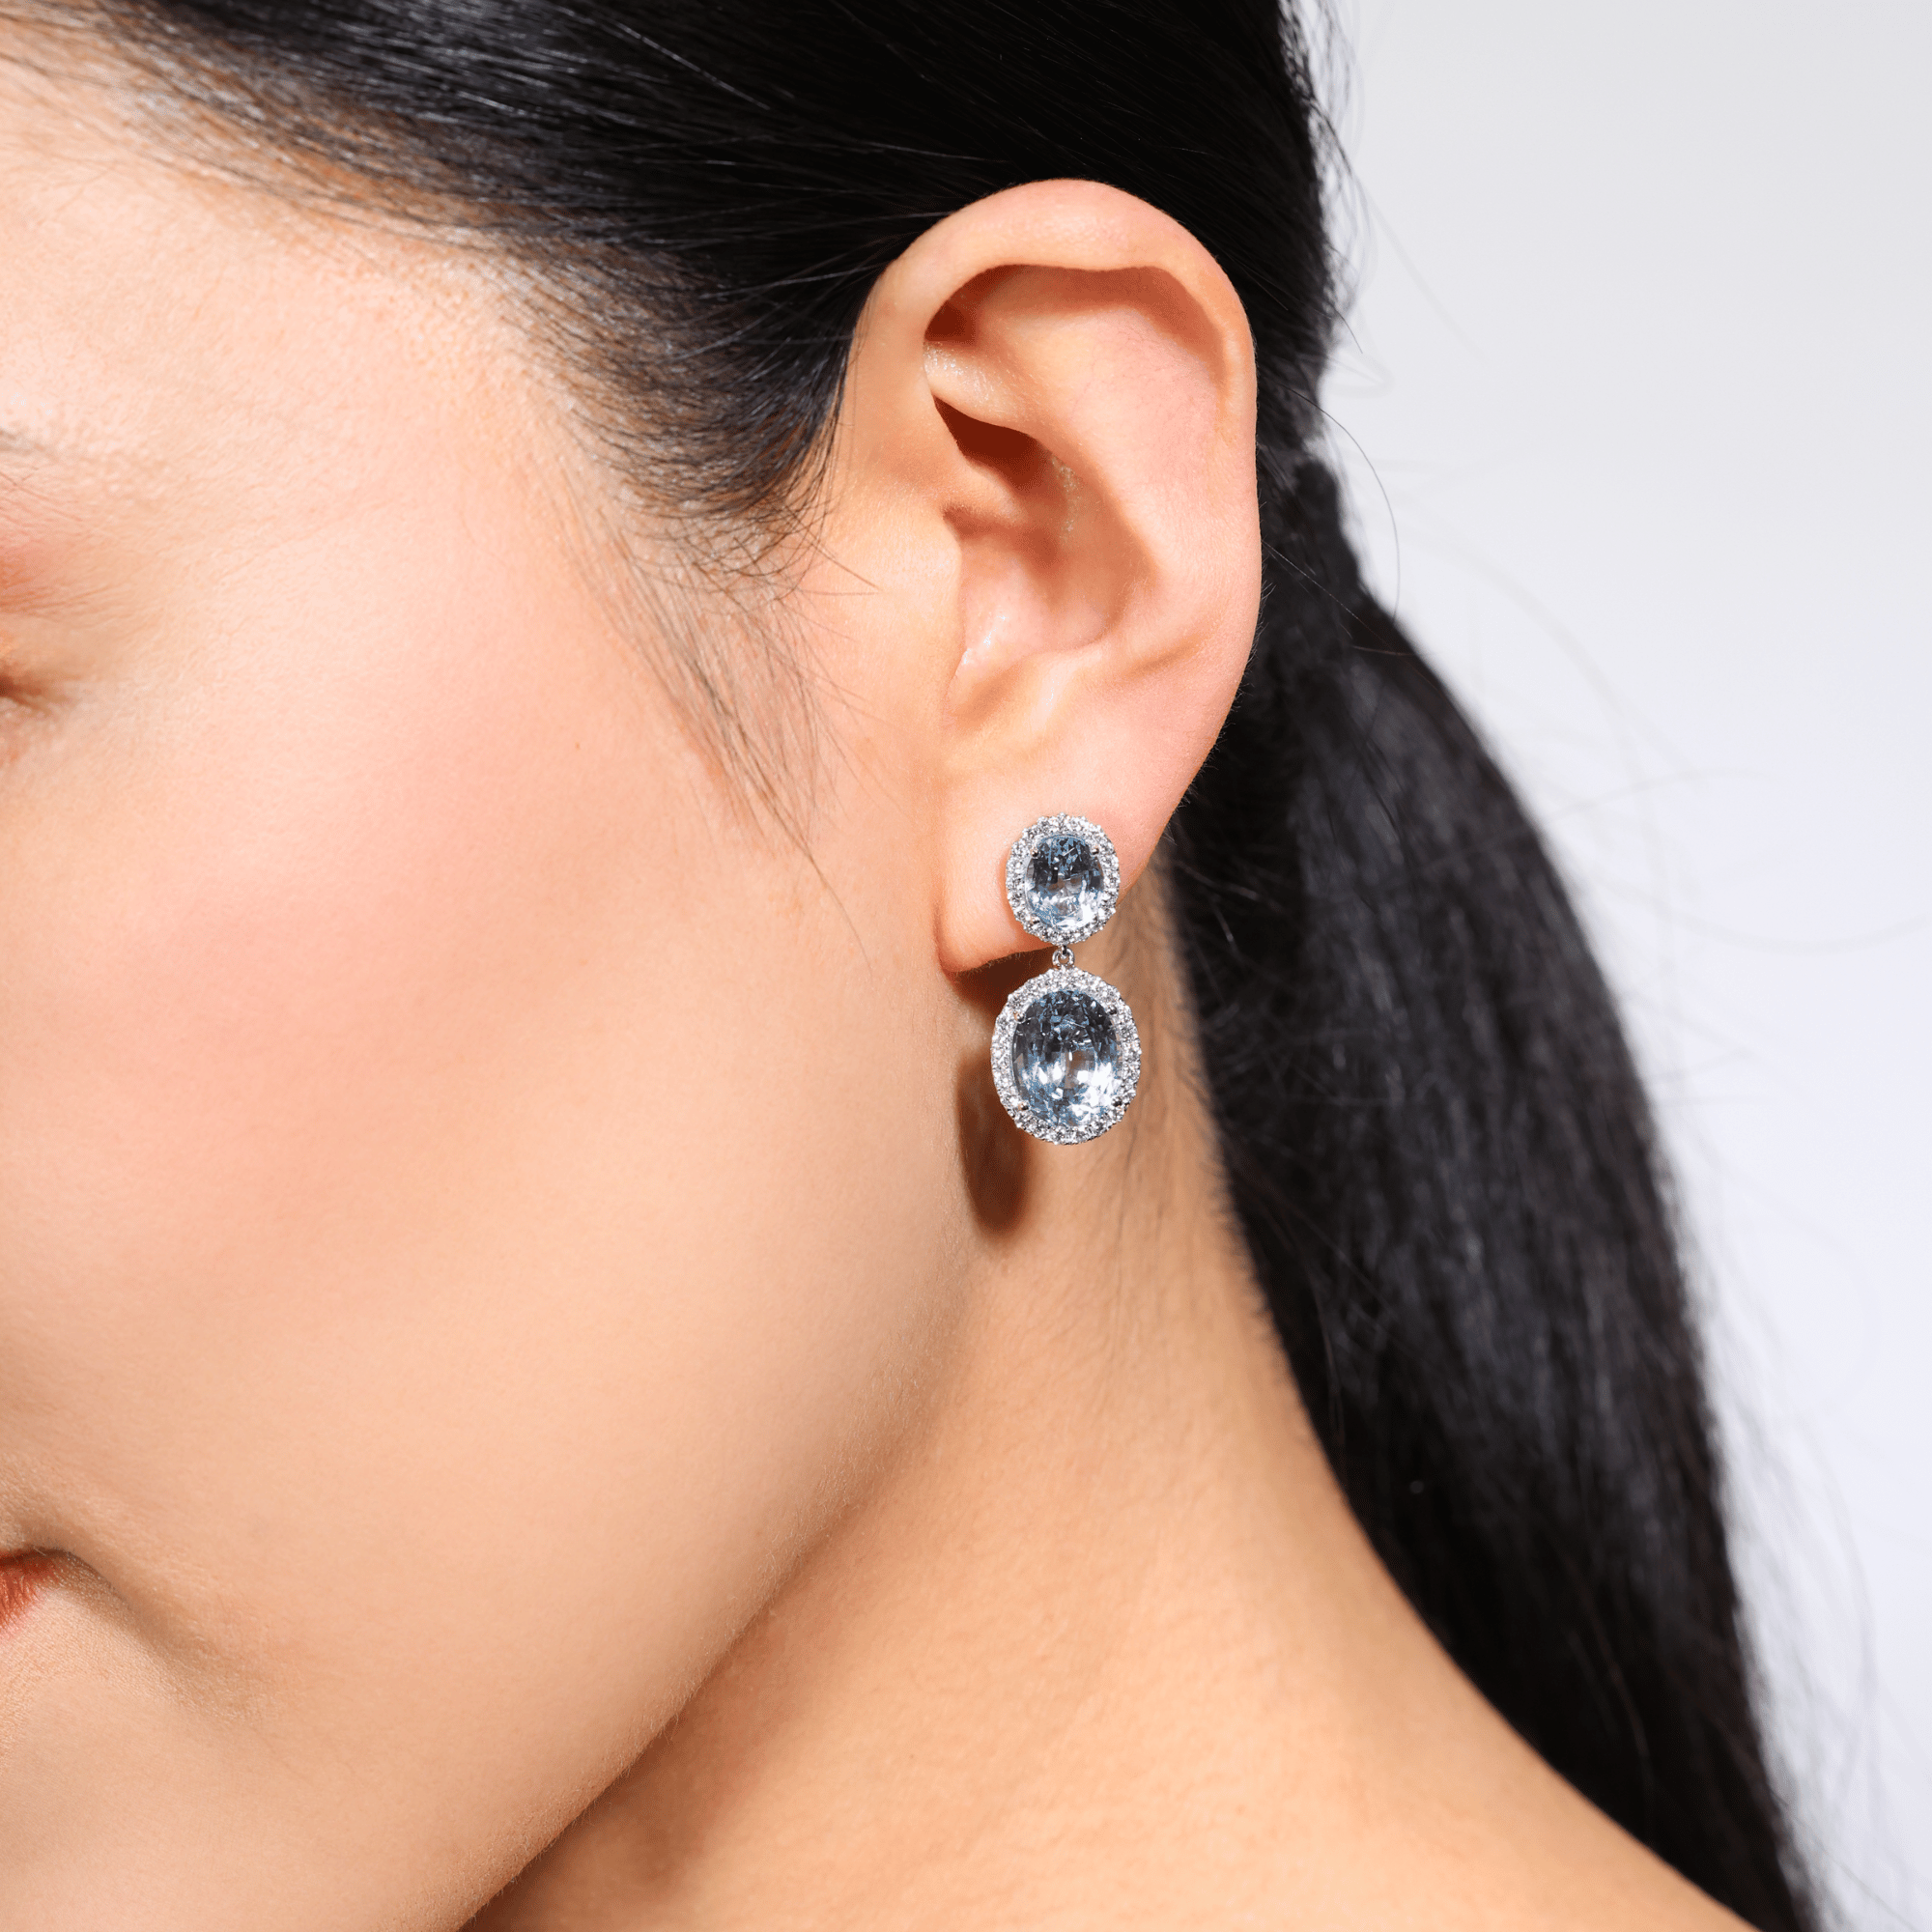 Sky blue oval cut topaz and diamond drop earrings